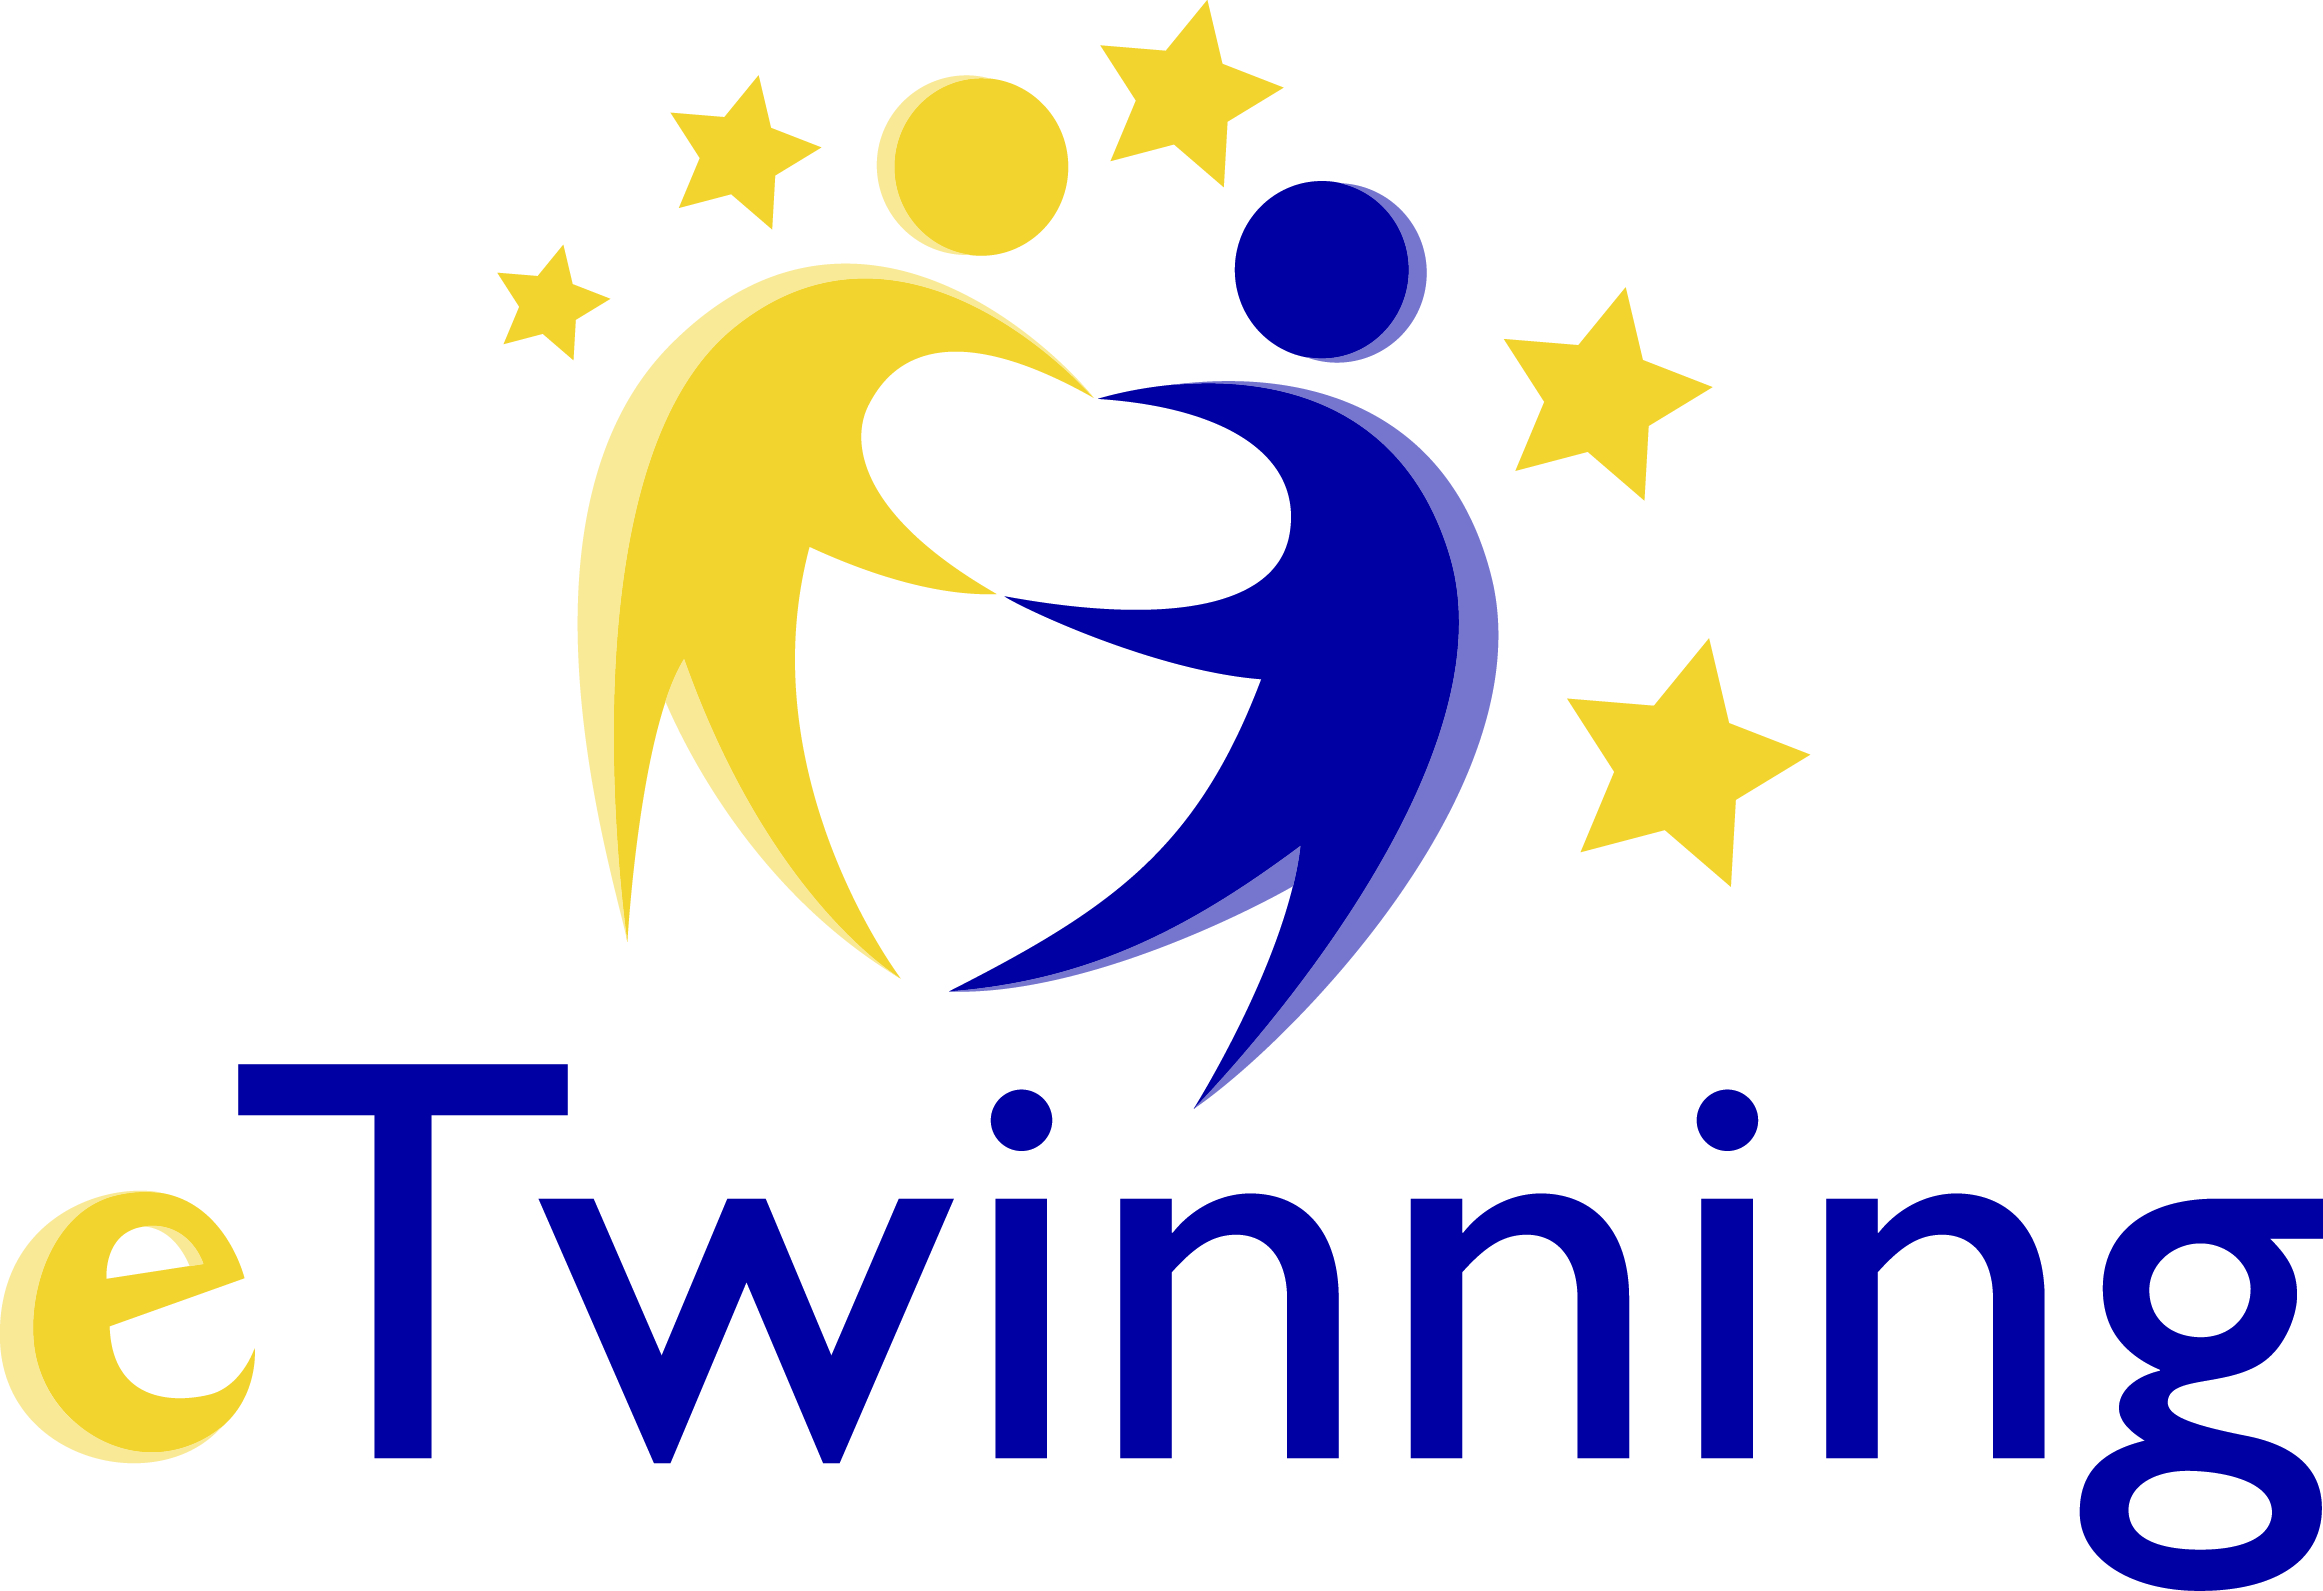 eTwinning logo - Slika 1